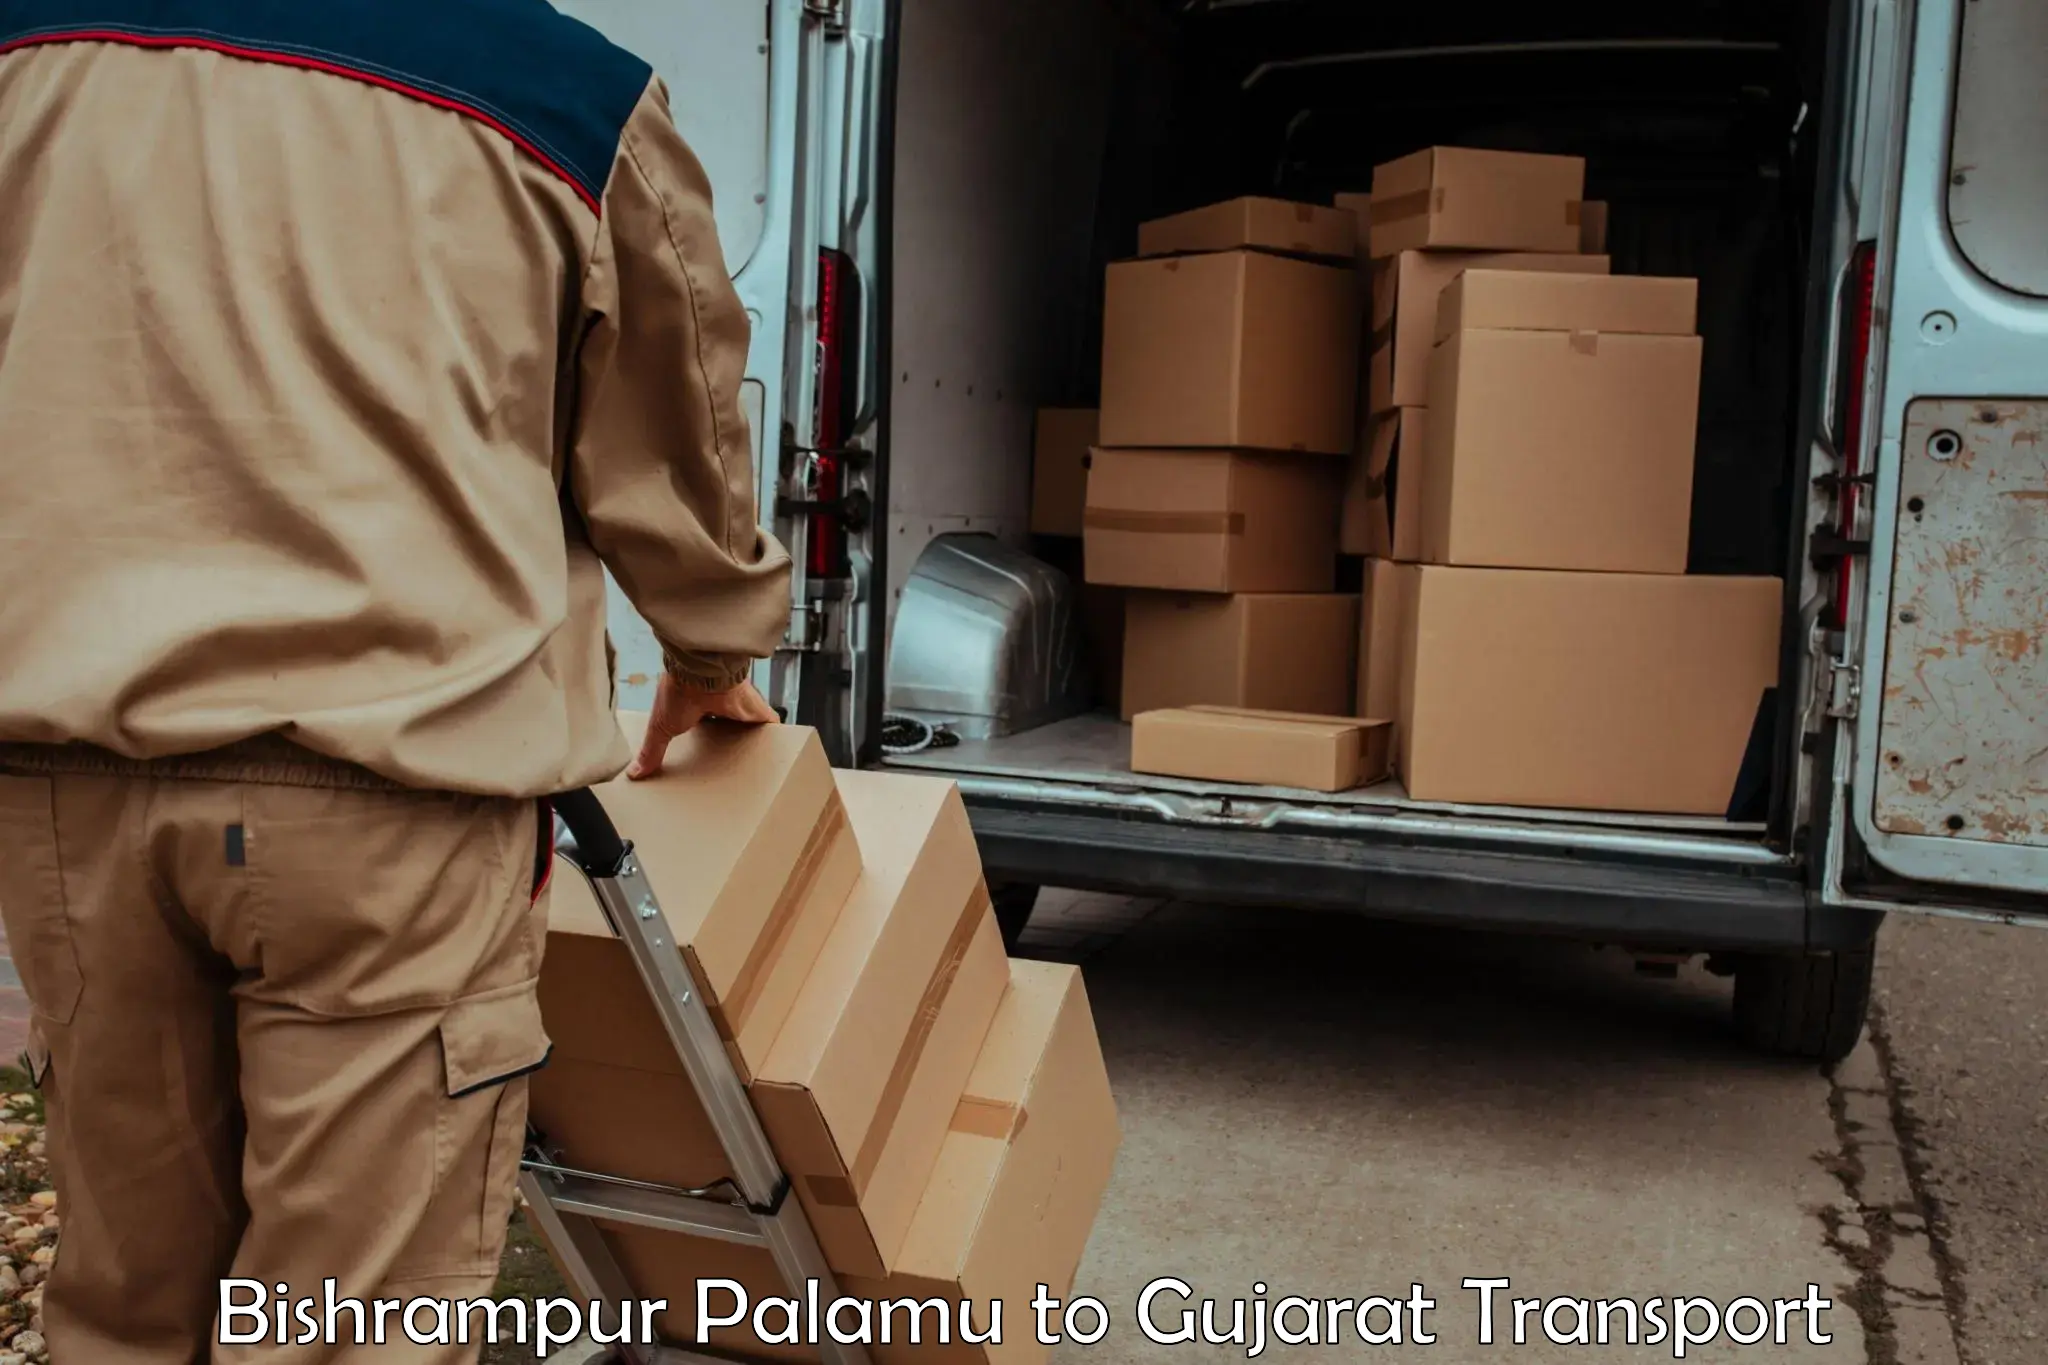 Daily parcel service transport Bishrampur Palamu to Bhuj